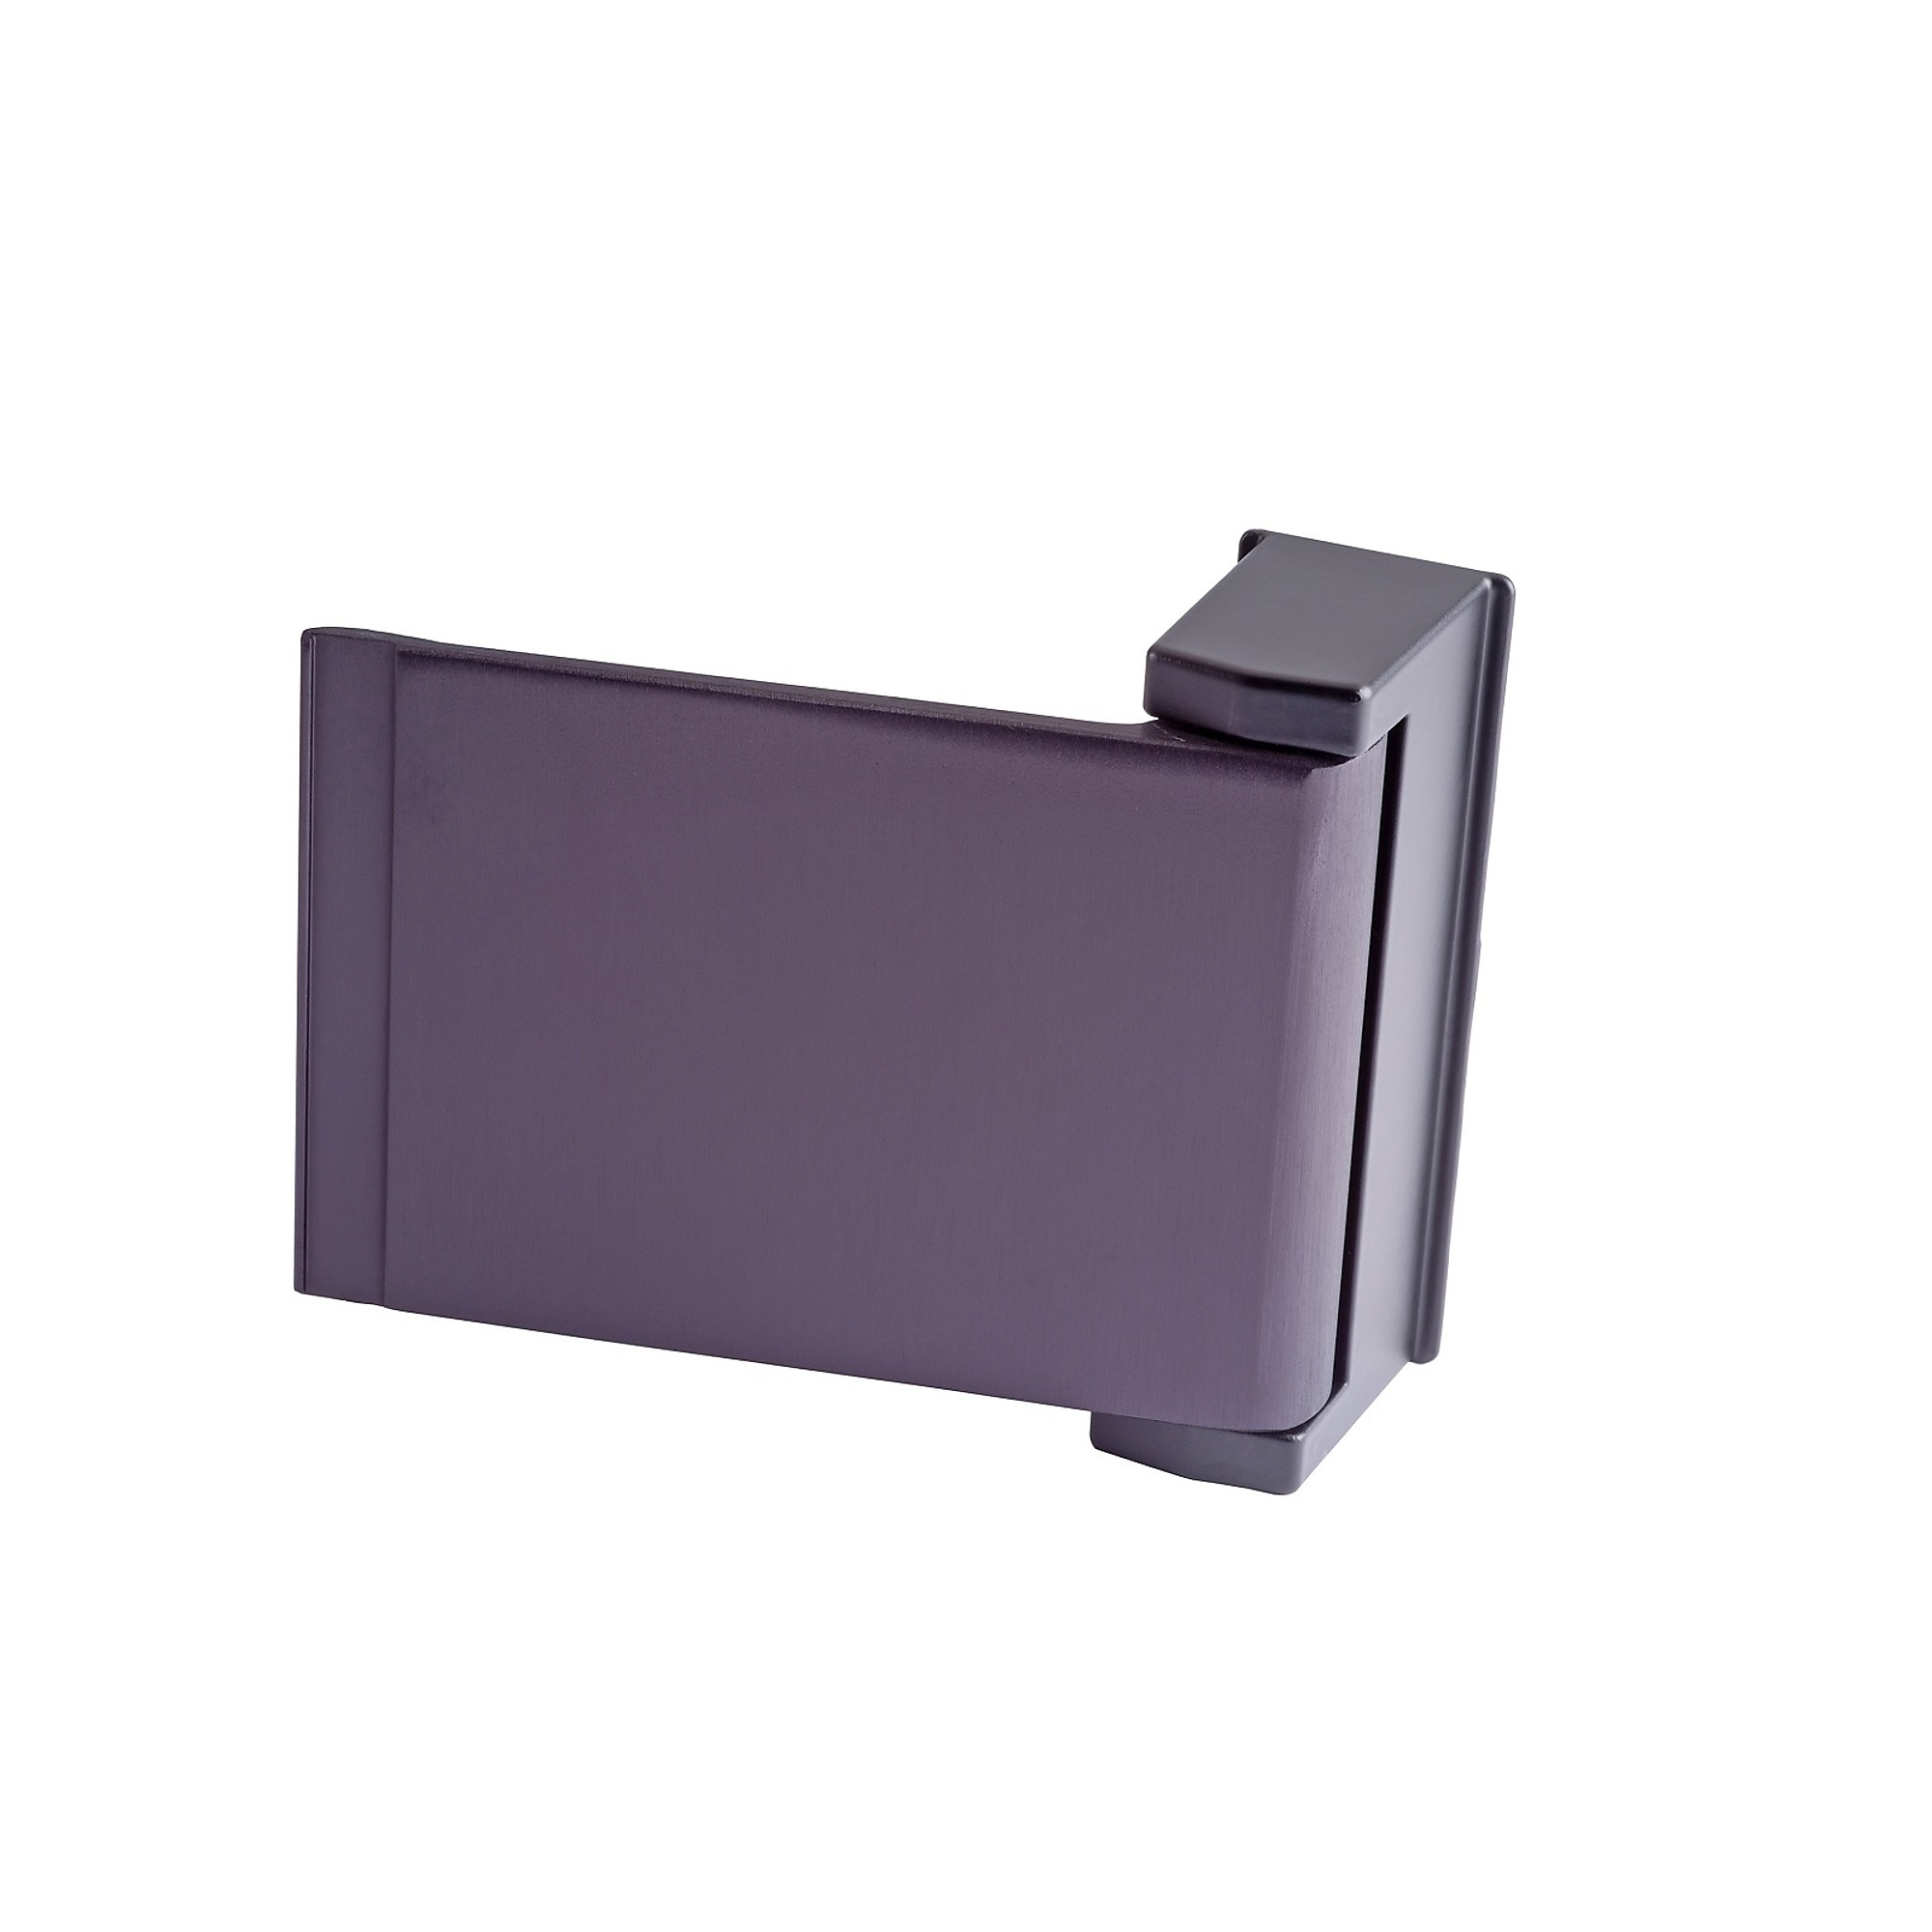 Global Door Controls, Duronodic Storefront 4 Way Reversible Push Paddle, Model TH1100-PUSH-DU